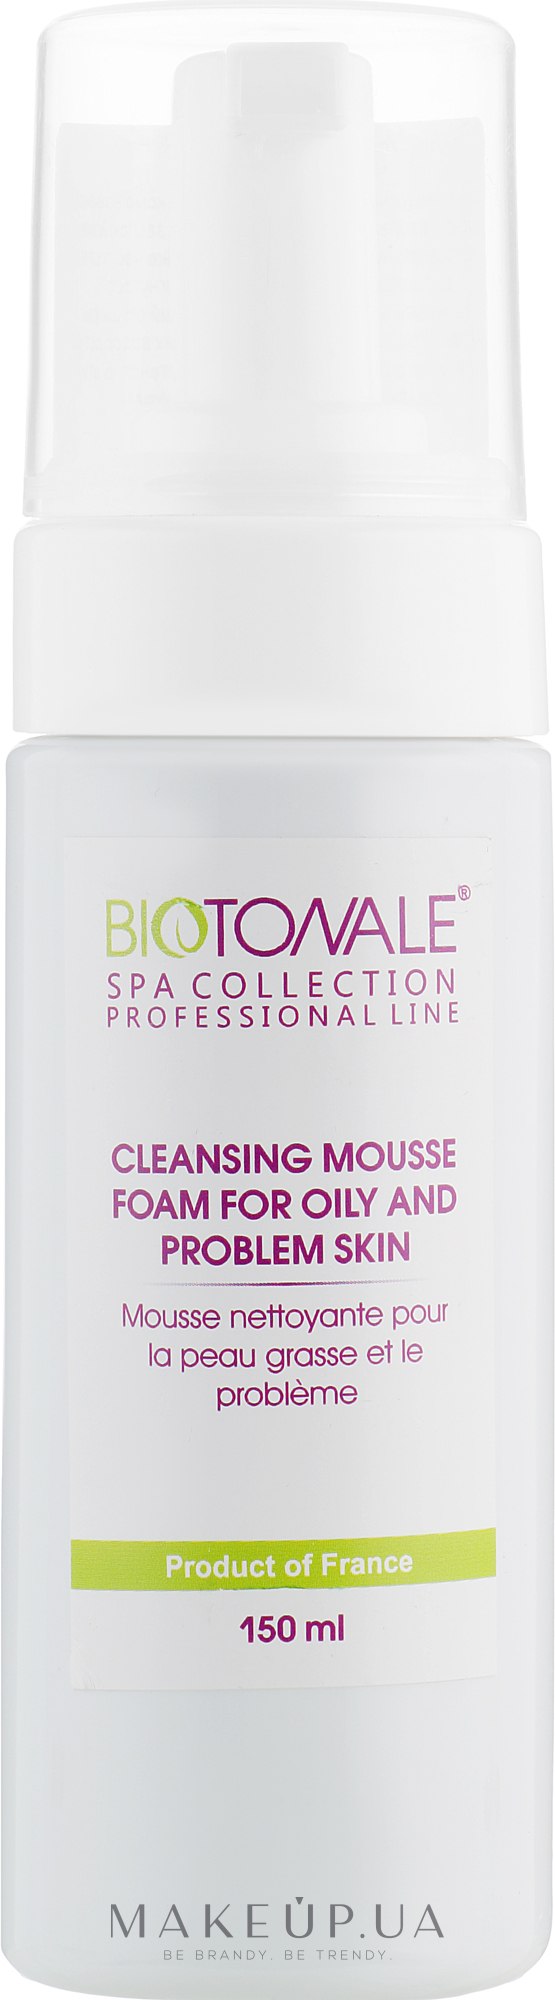 Очищающий мусс-пена для жирной и проблемной кожи - Biotonale Cleansing Mousse Foam for Oily and Problem Skin — фото 150ml